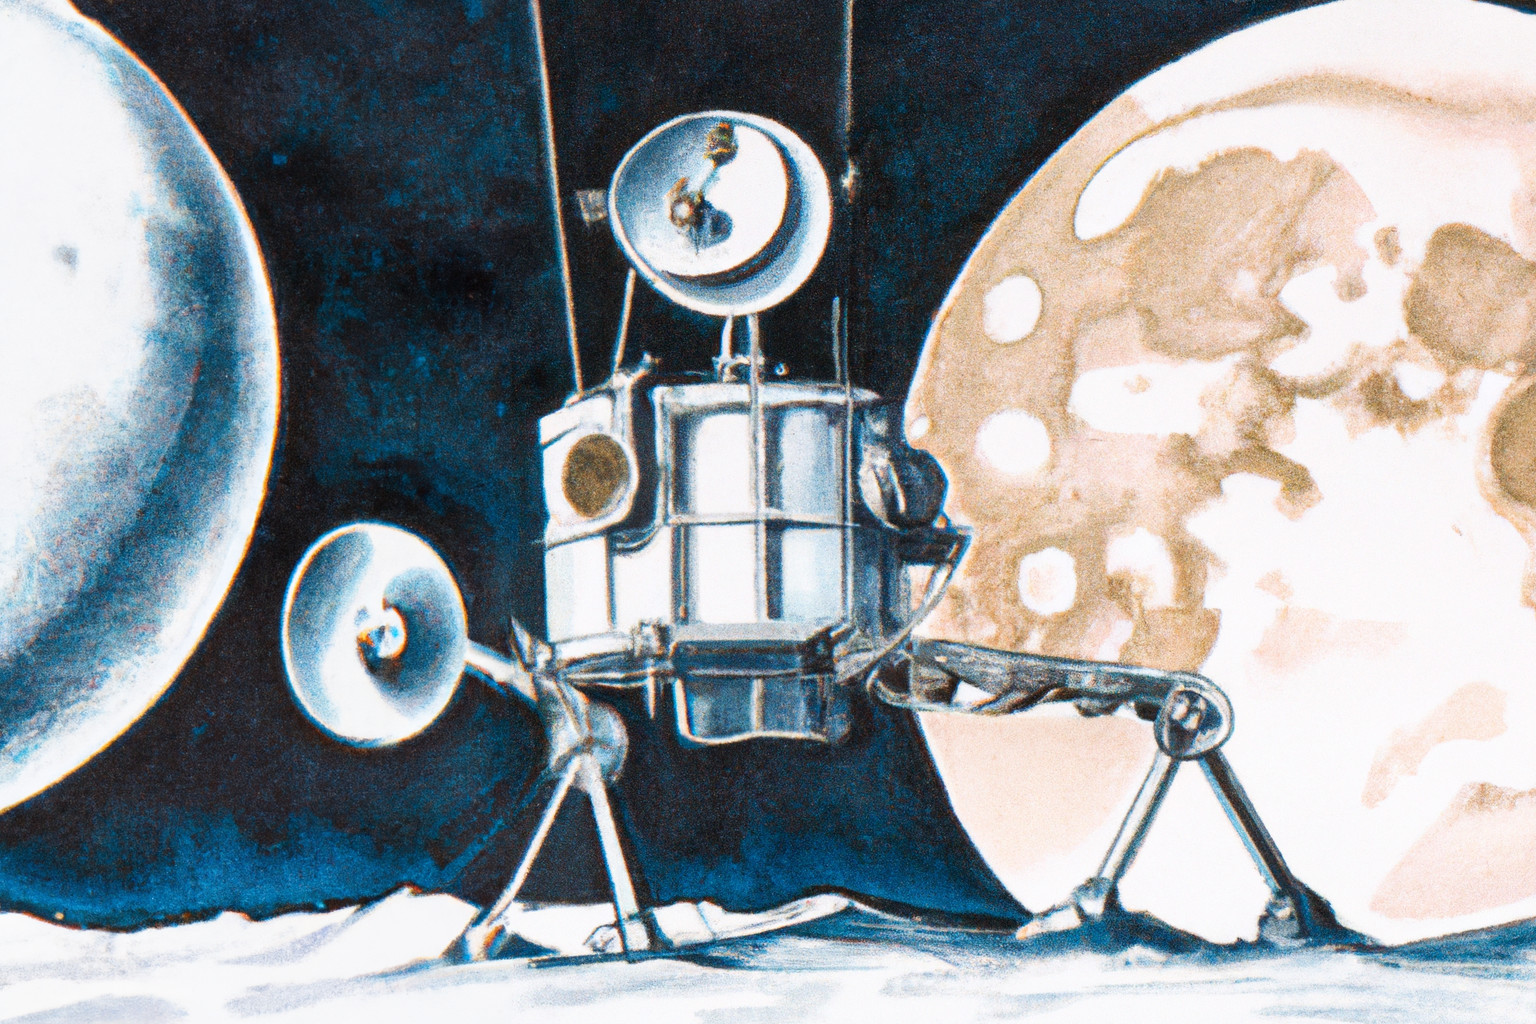 dall e alternative ImgCreator.ai watercolor of Artemis moon mission orbiting the Moon